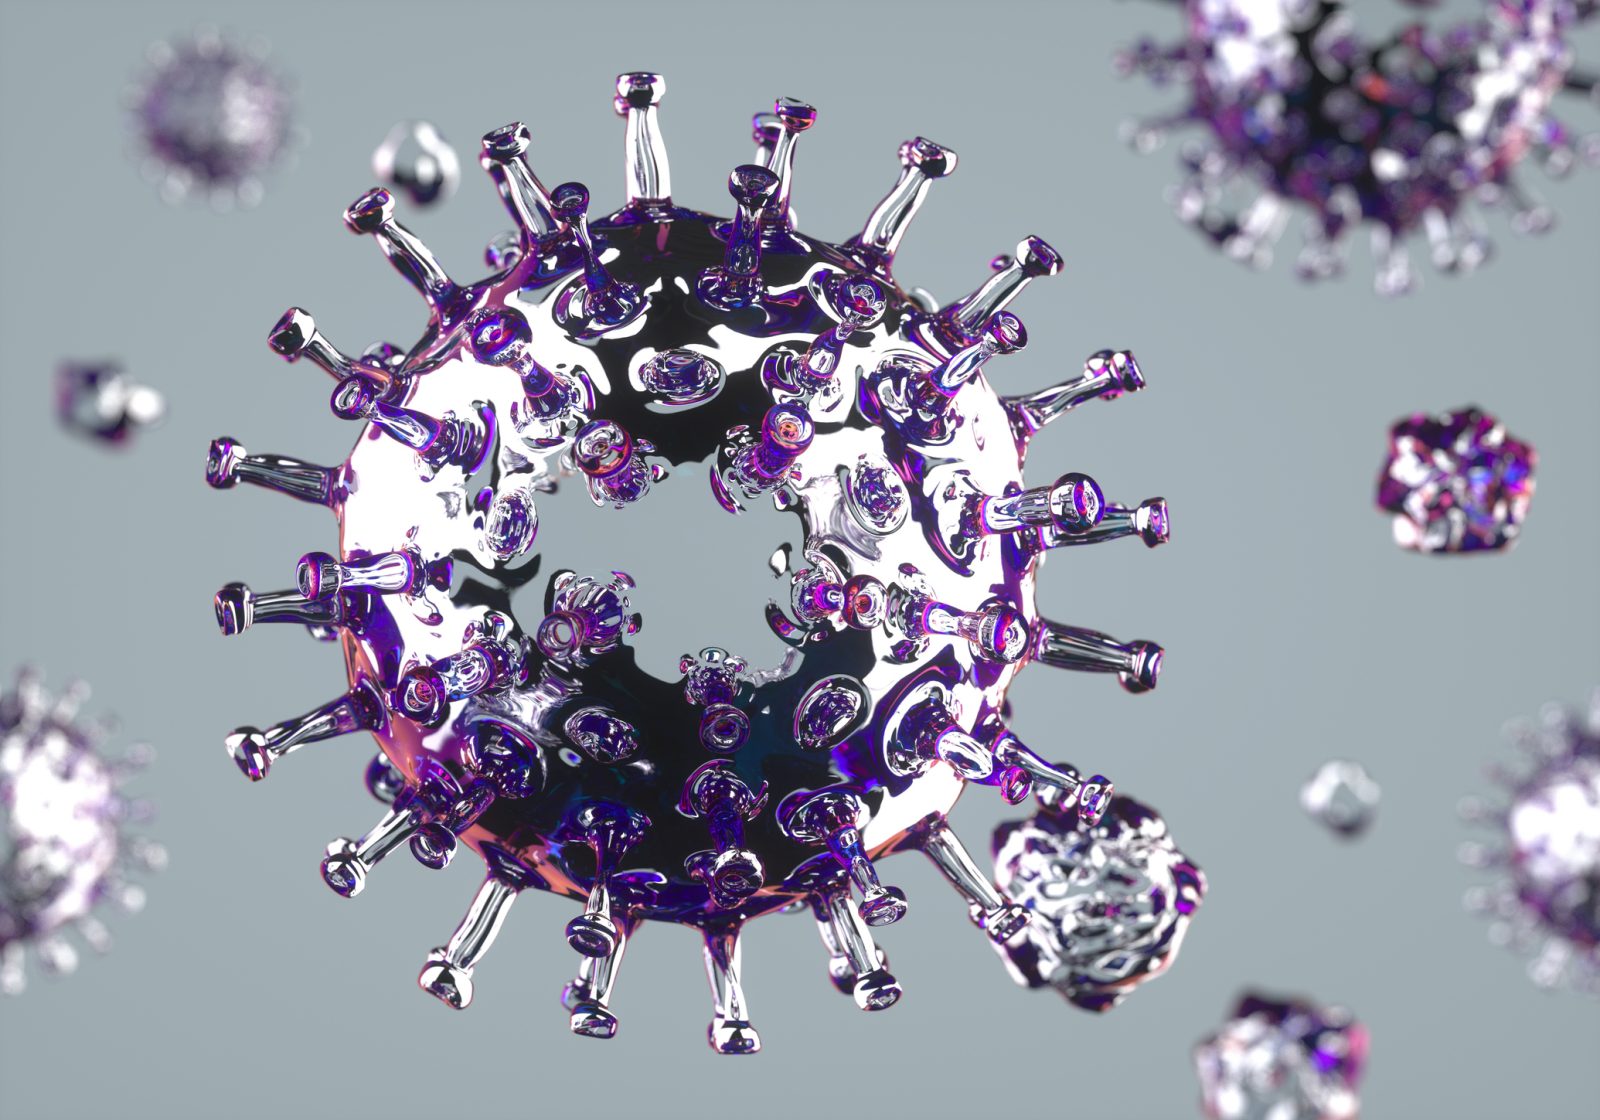 Coronavirus structure